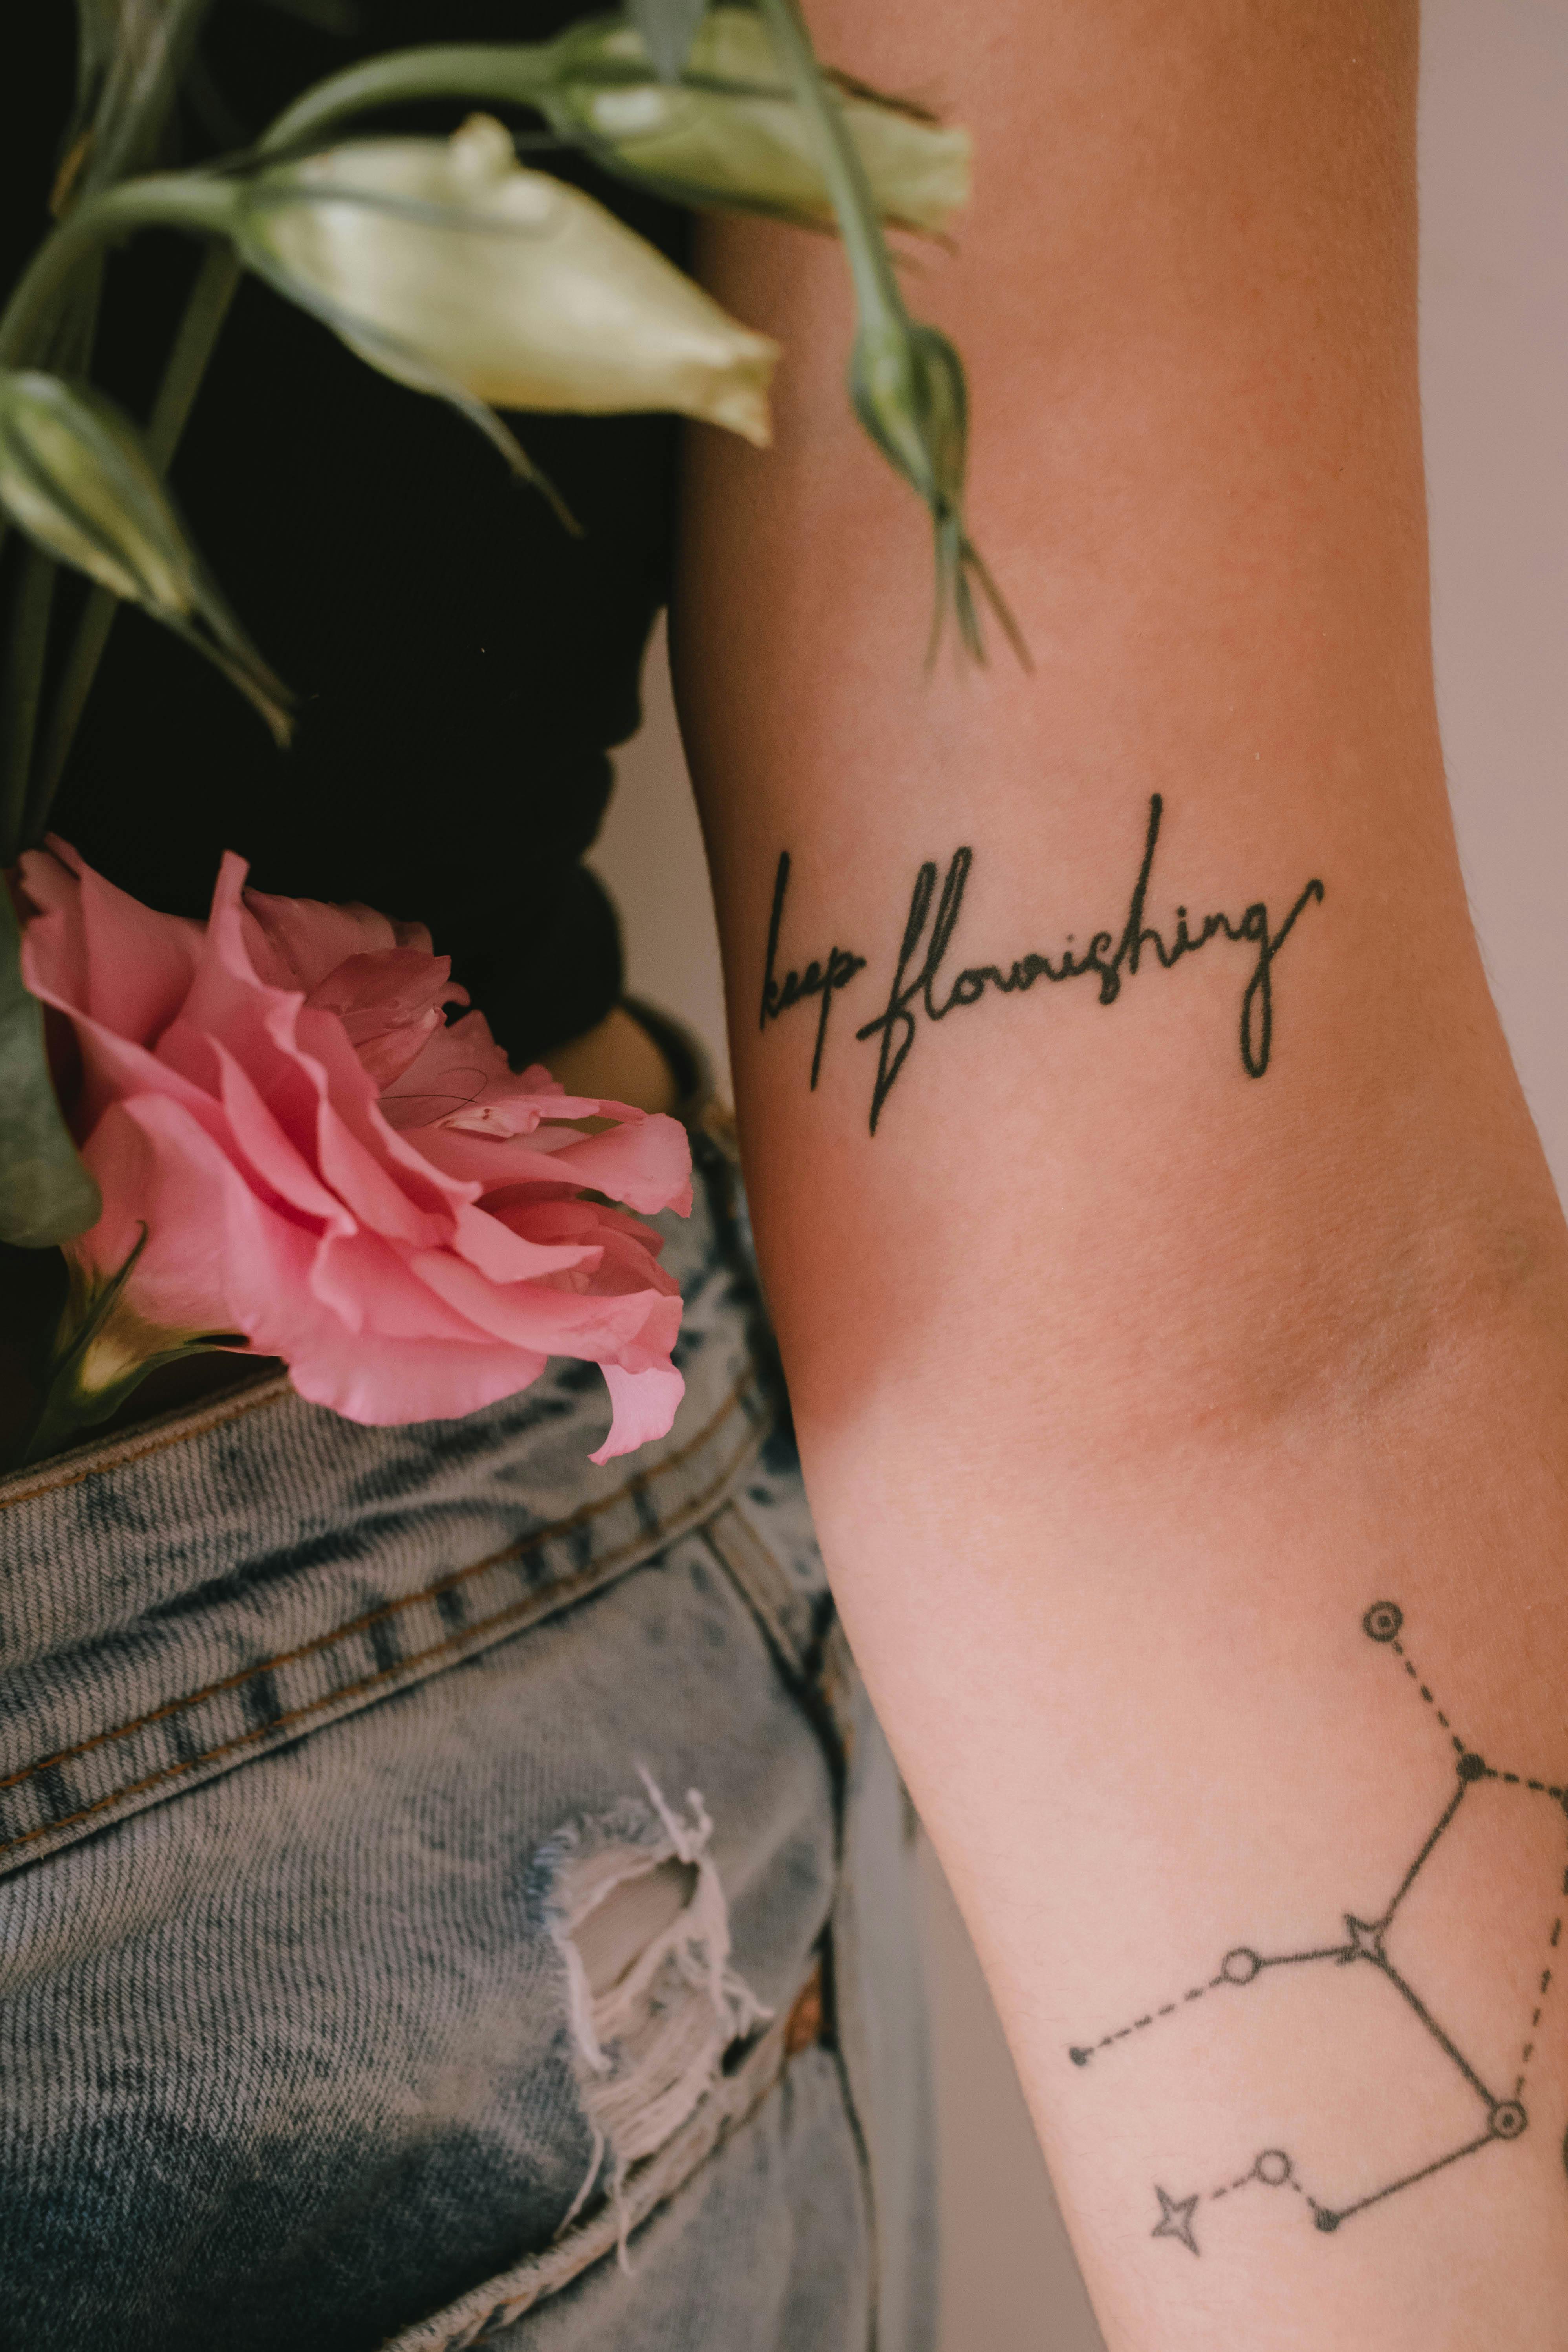 Romantic Rose Tattoo Inspirations   easyink